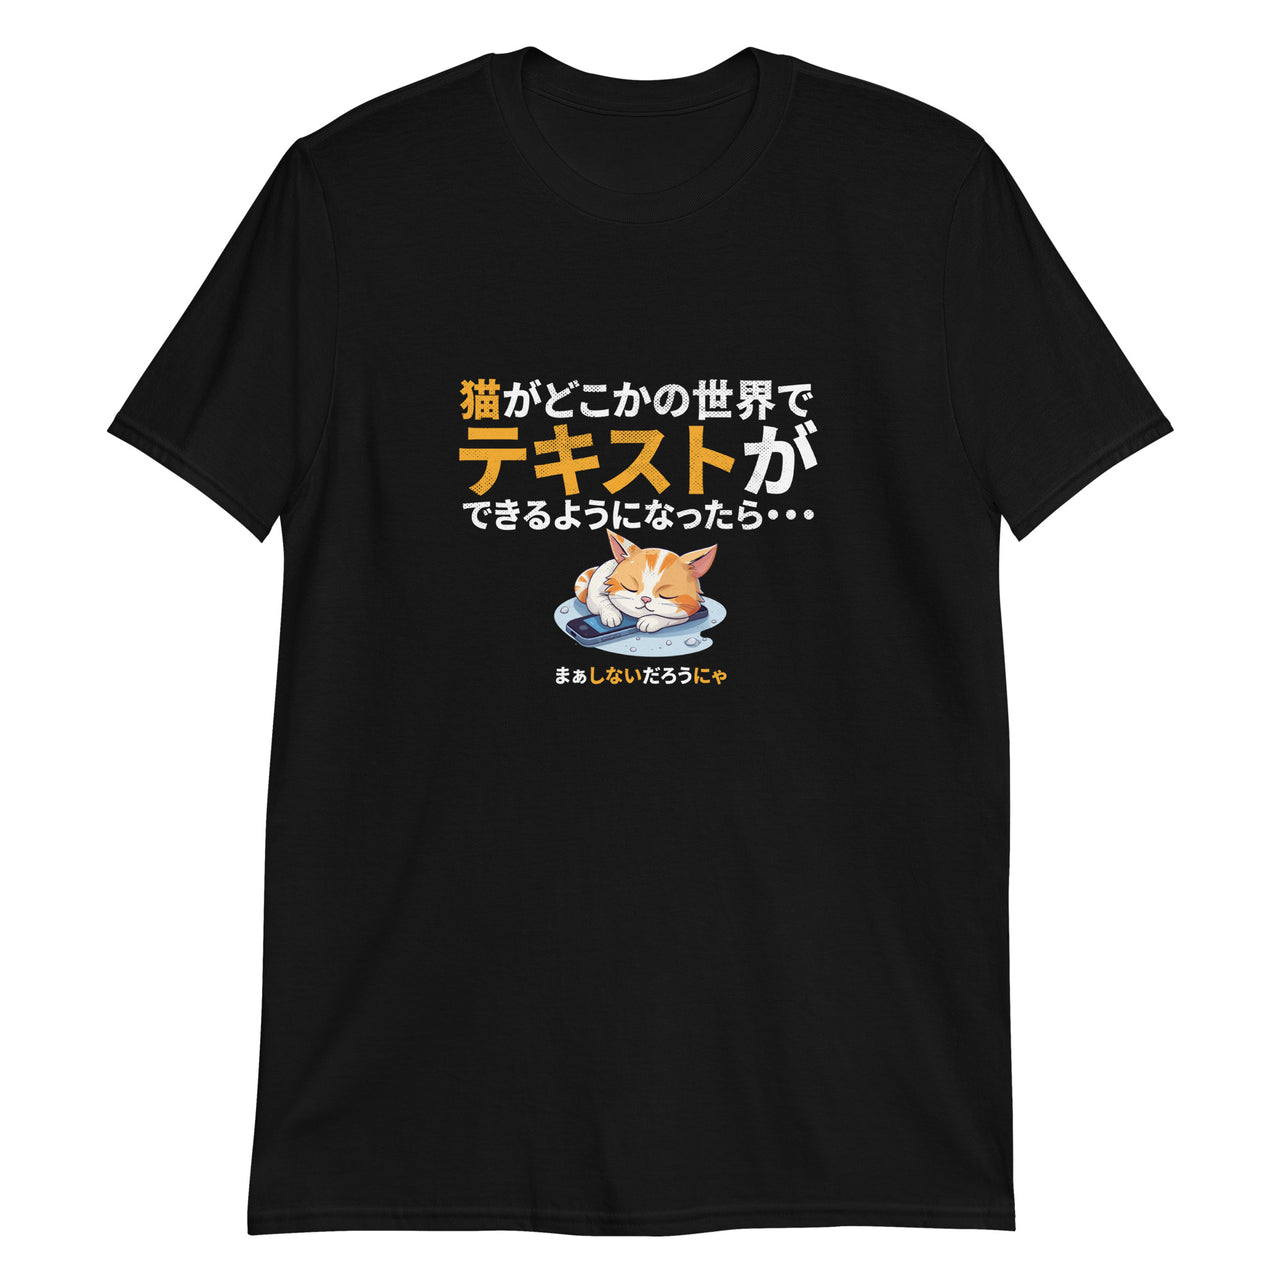 If Cats Could Text, Neko Japanese T-Shirt